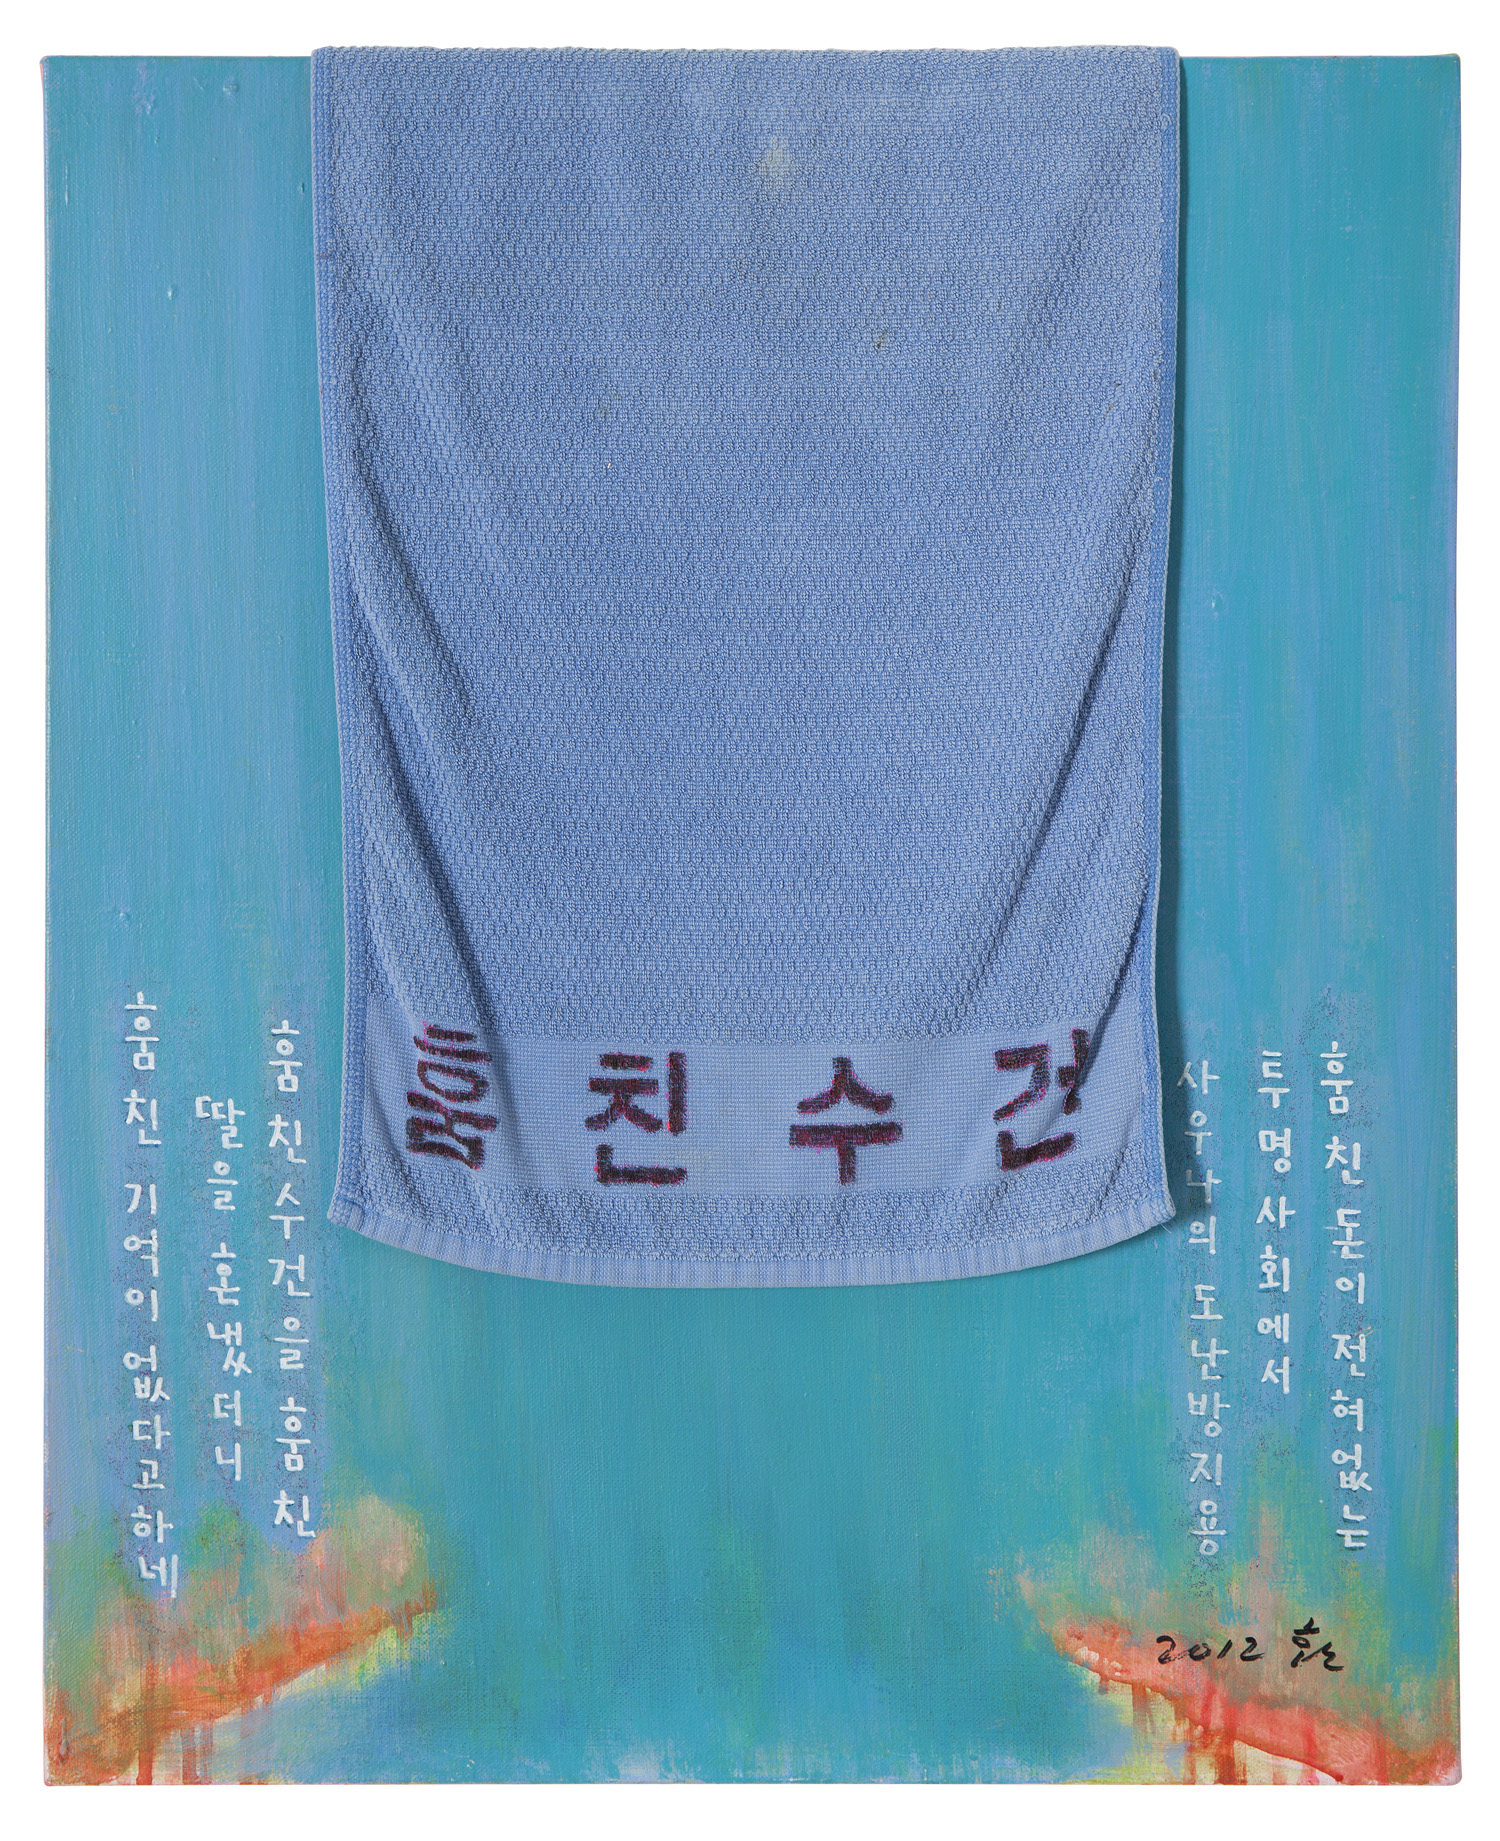 A Stolen Towel, 2012, Acrylic and towel on canvas, 65x53.2cm